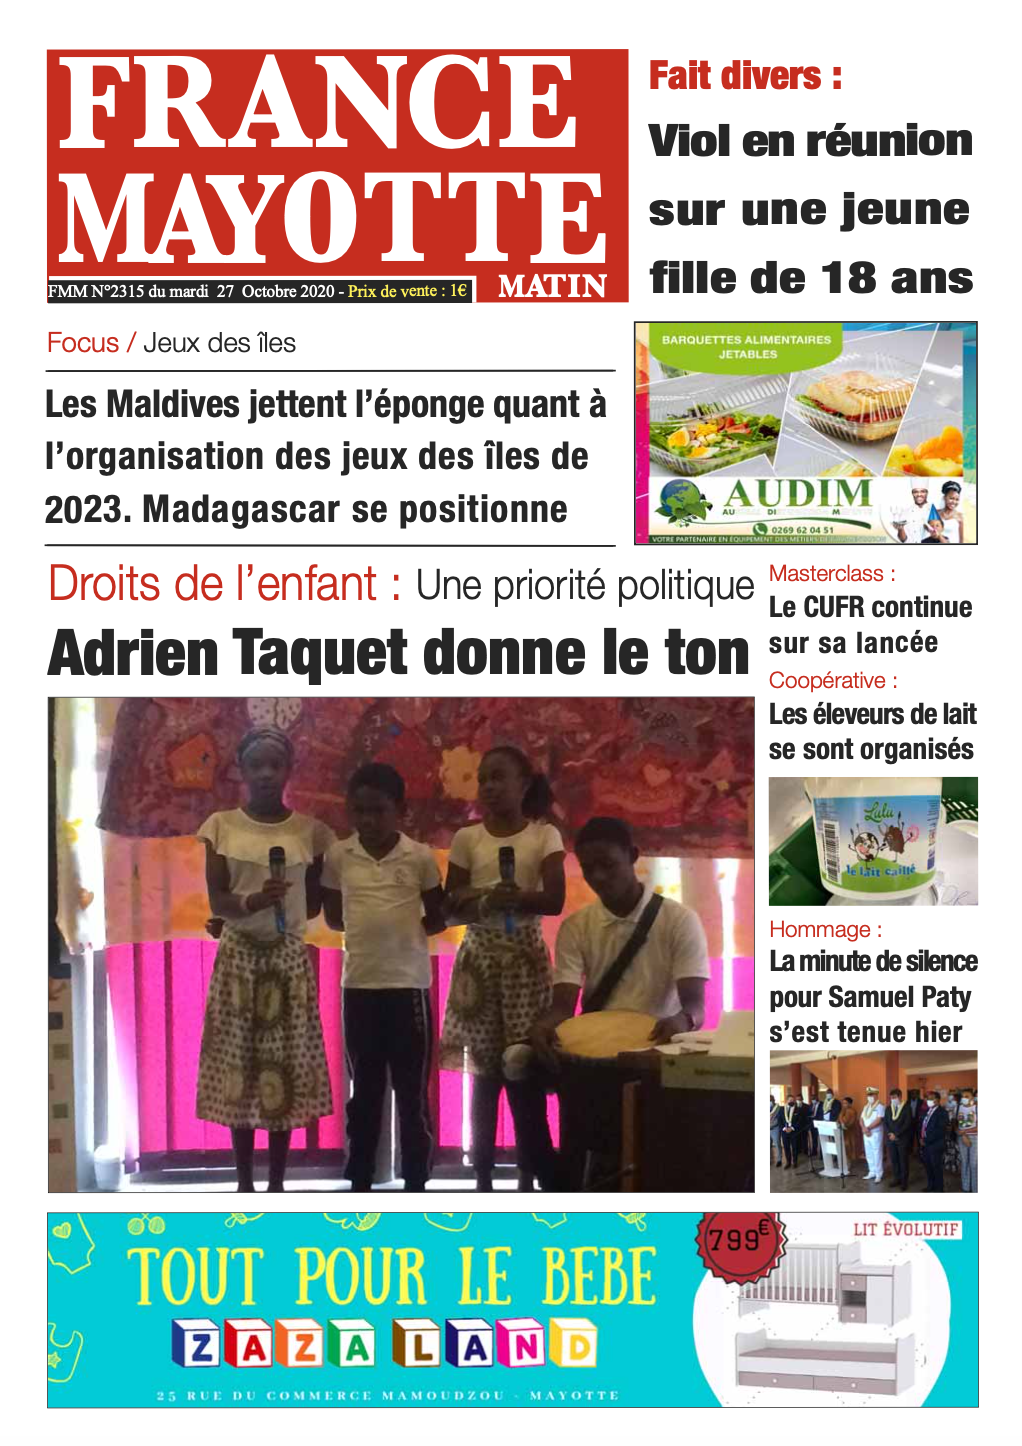 France Mayotte Mardi 27 octobre 2020